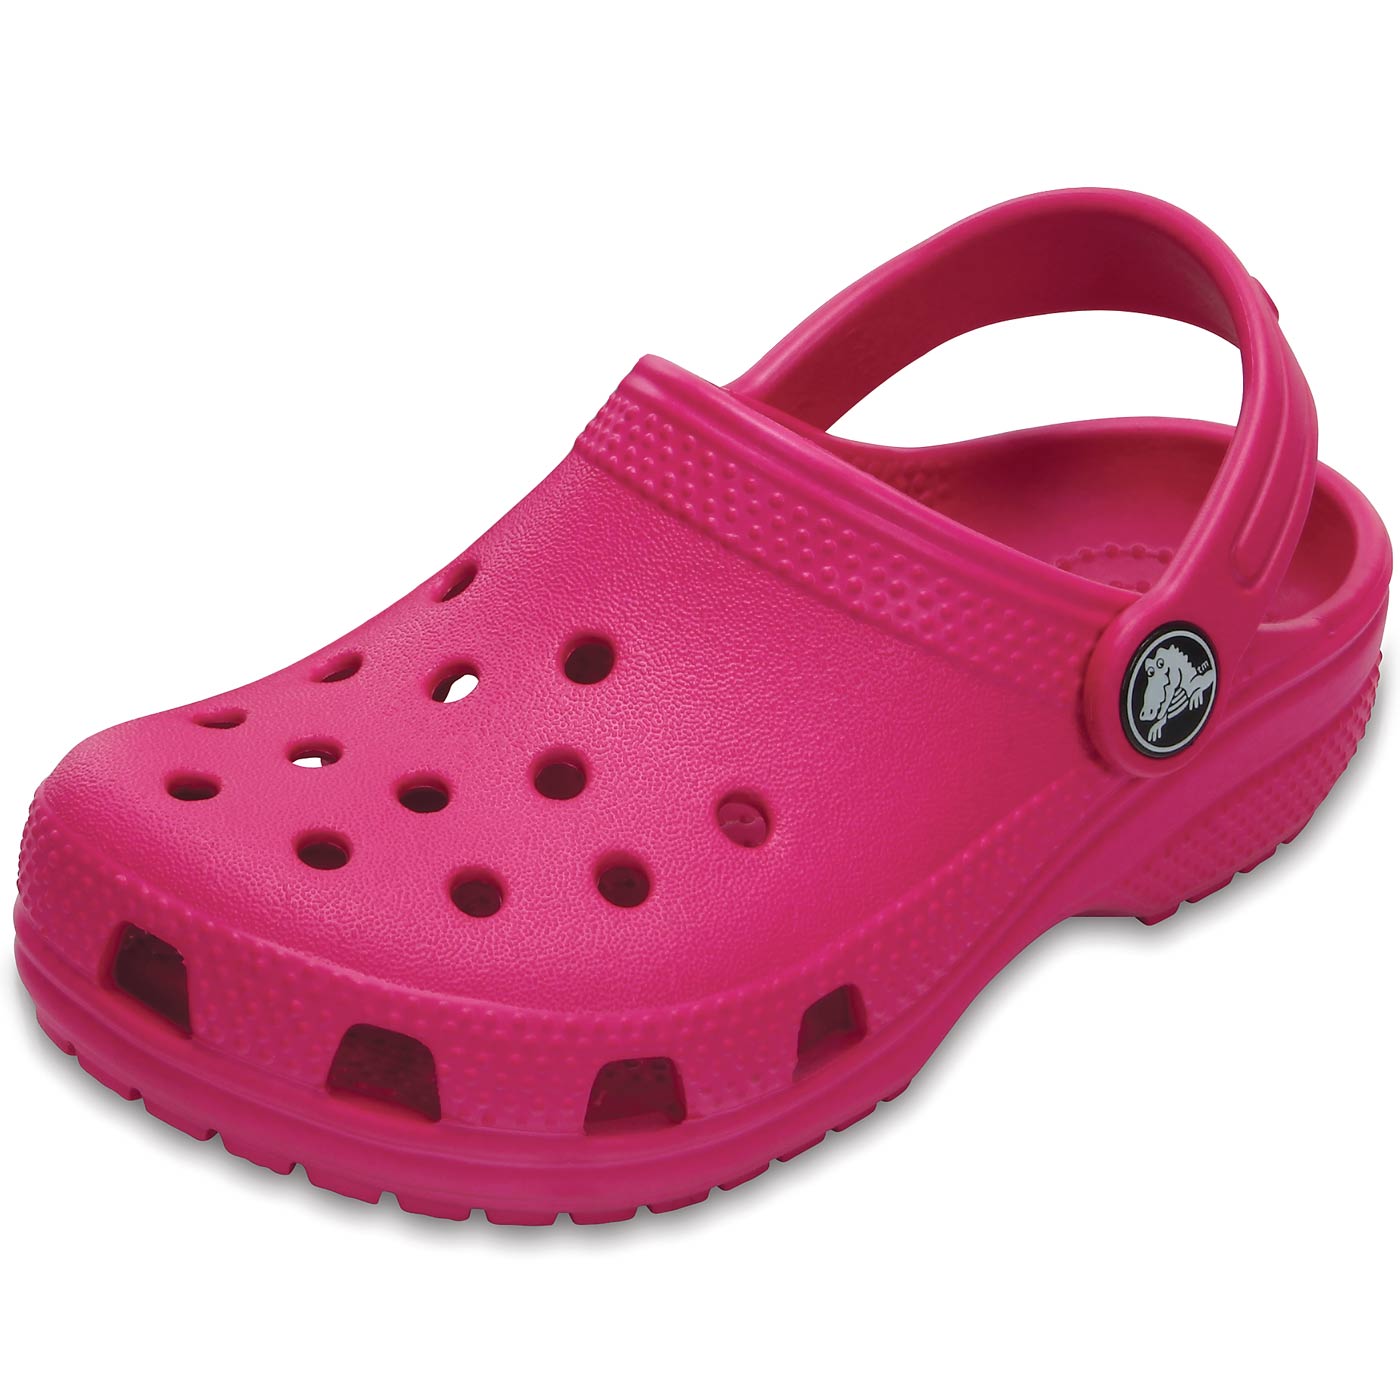 pink crocs for kids